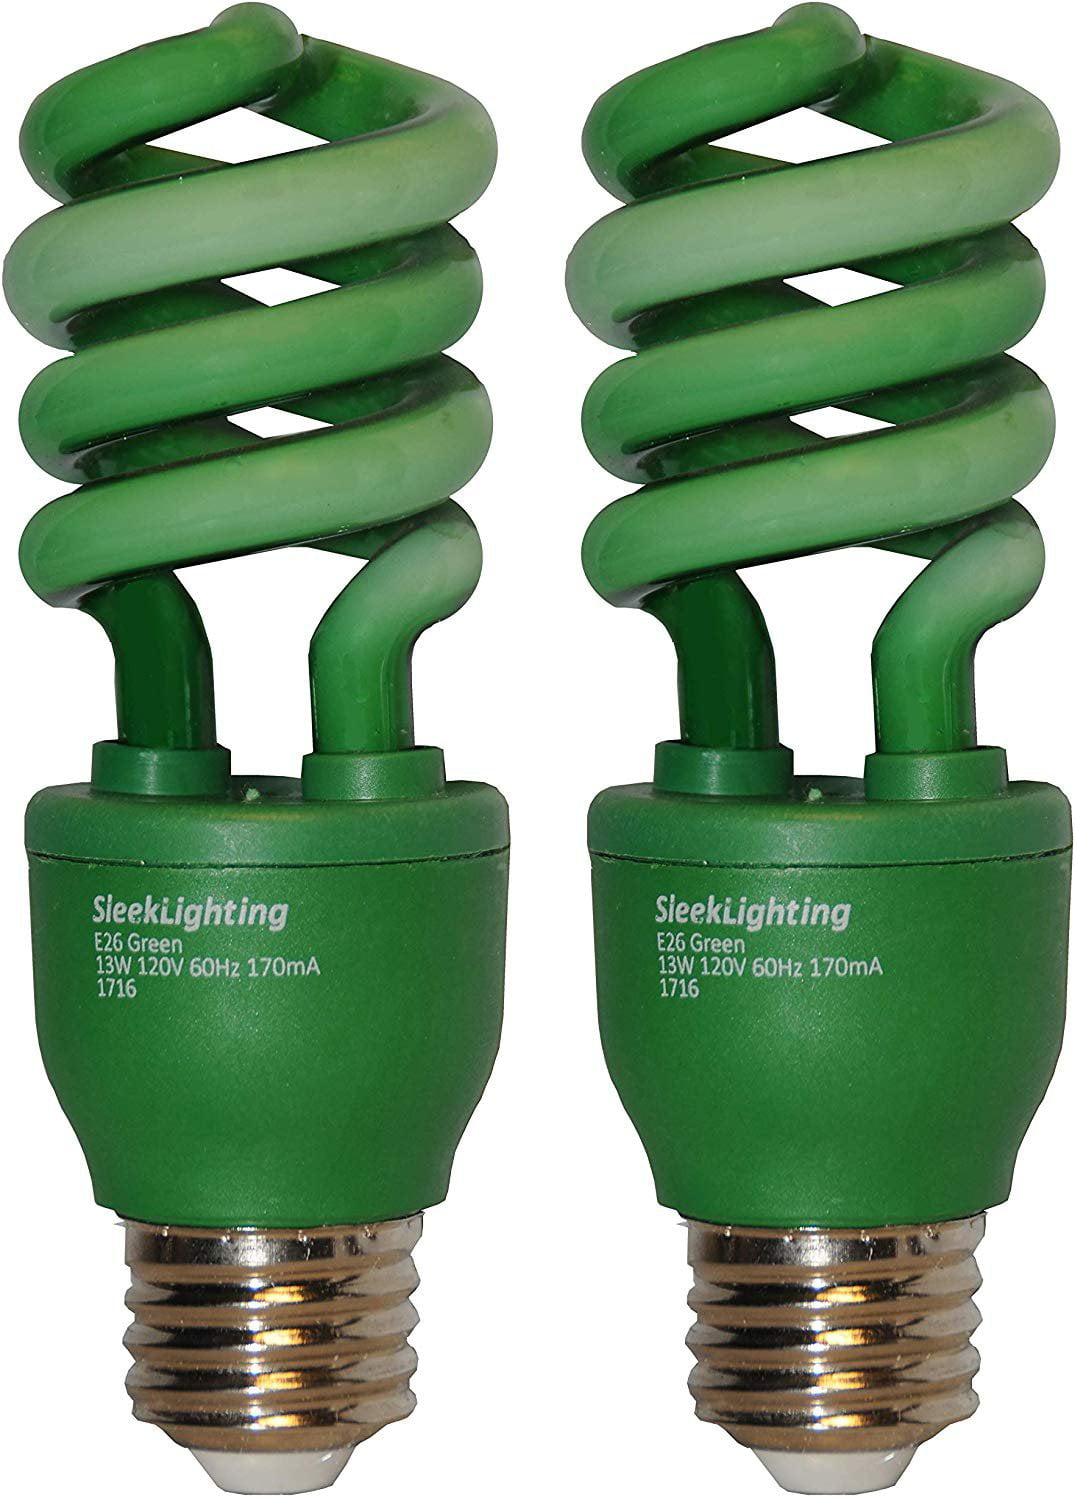 Watt Cfl Light Bulbs